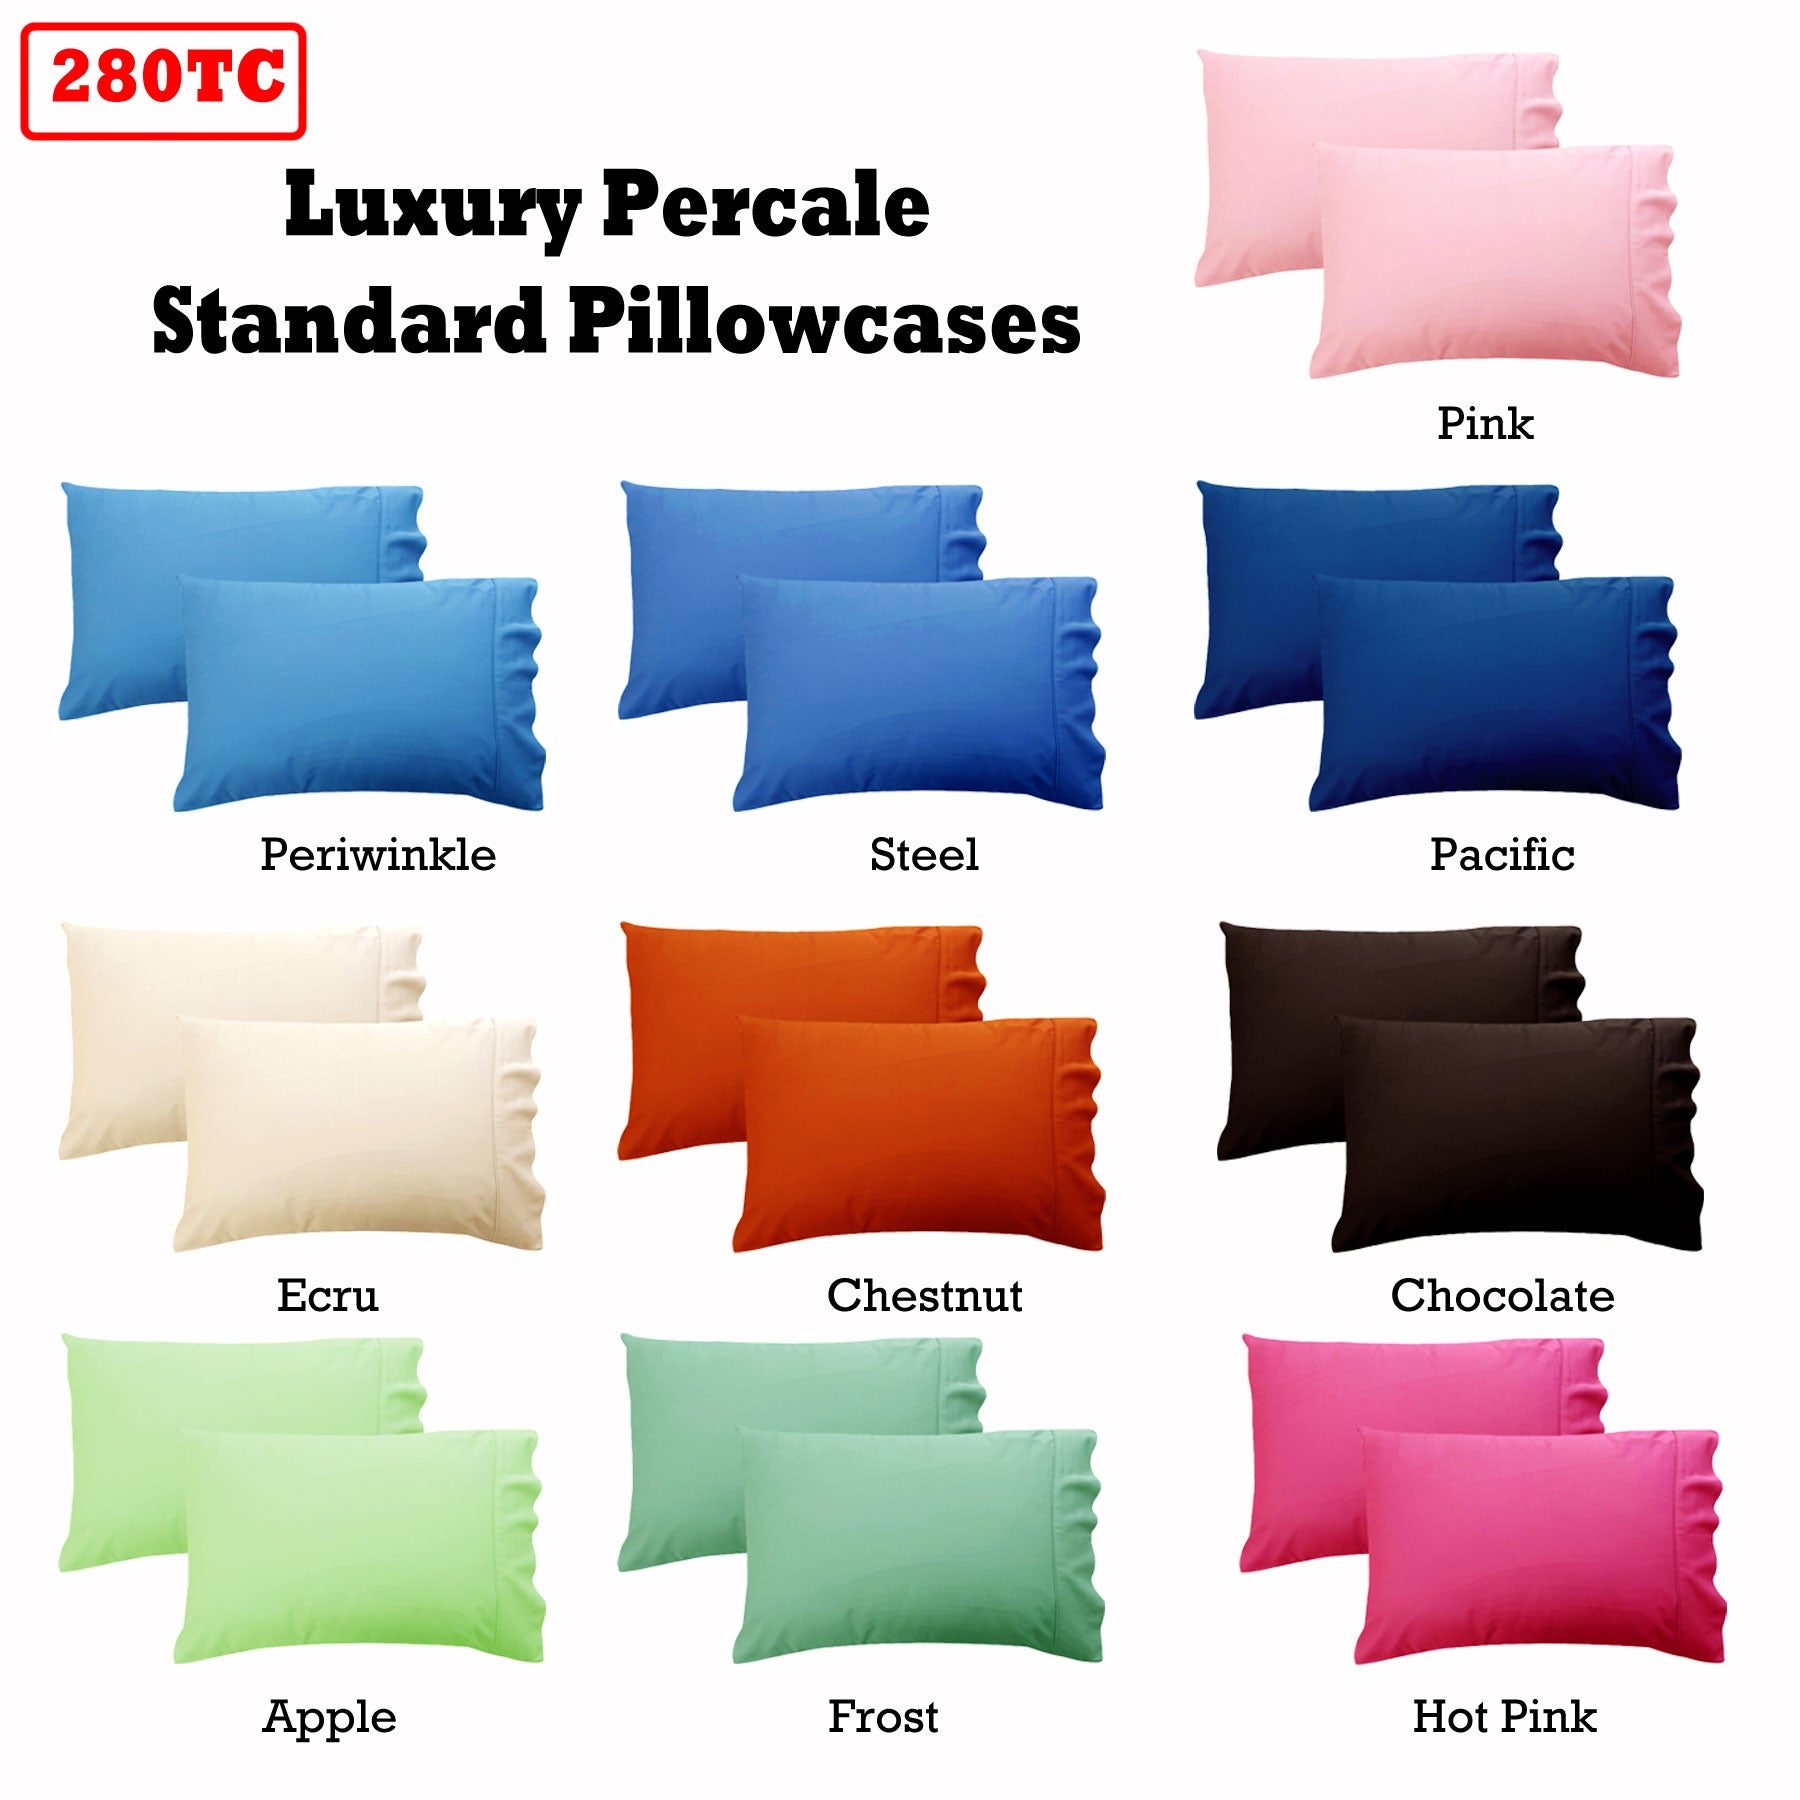 280TC Luxury Percale Standard Pillowcases Perwinkle - 0